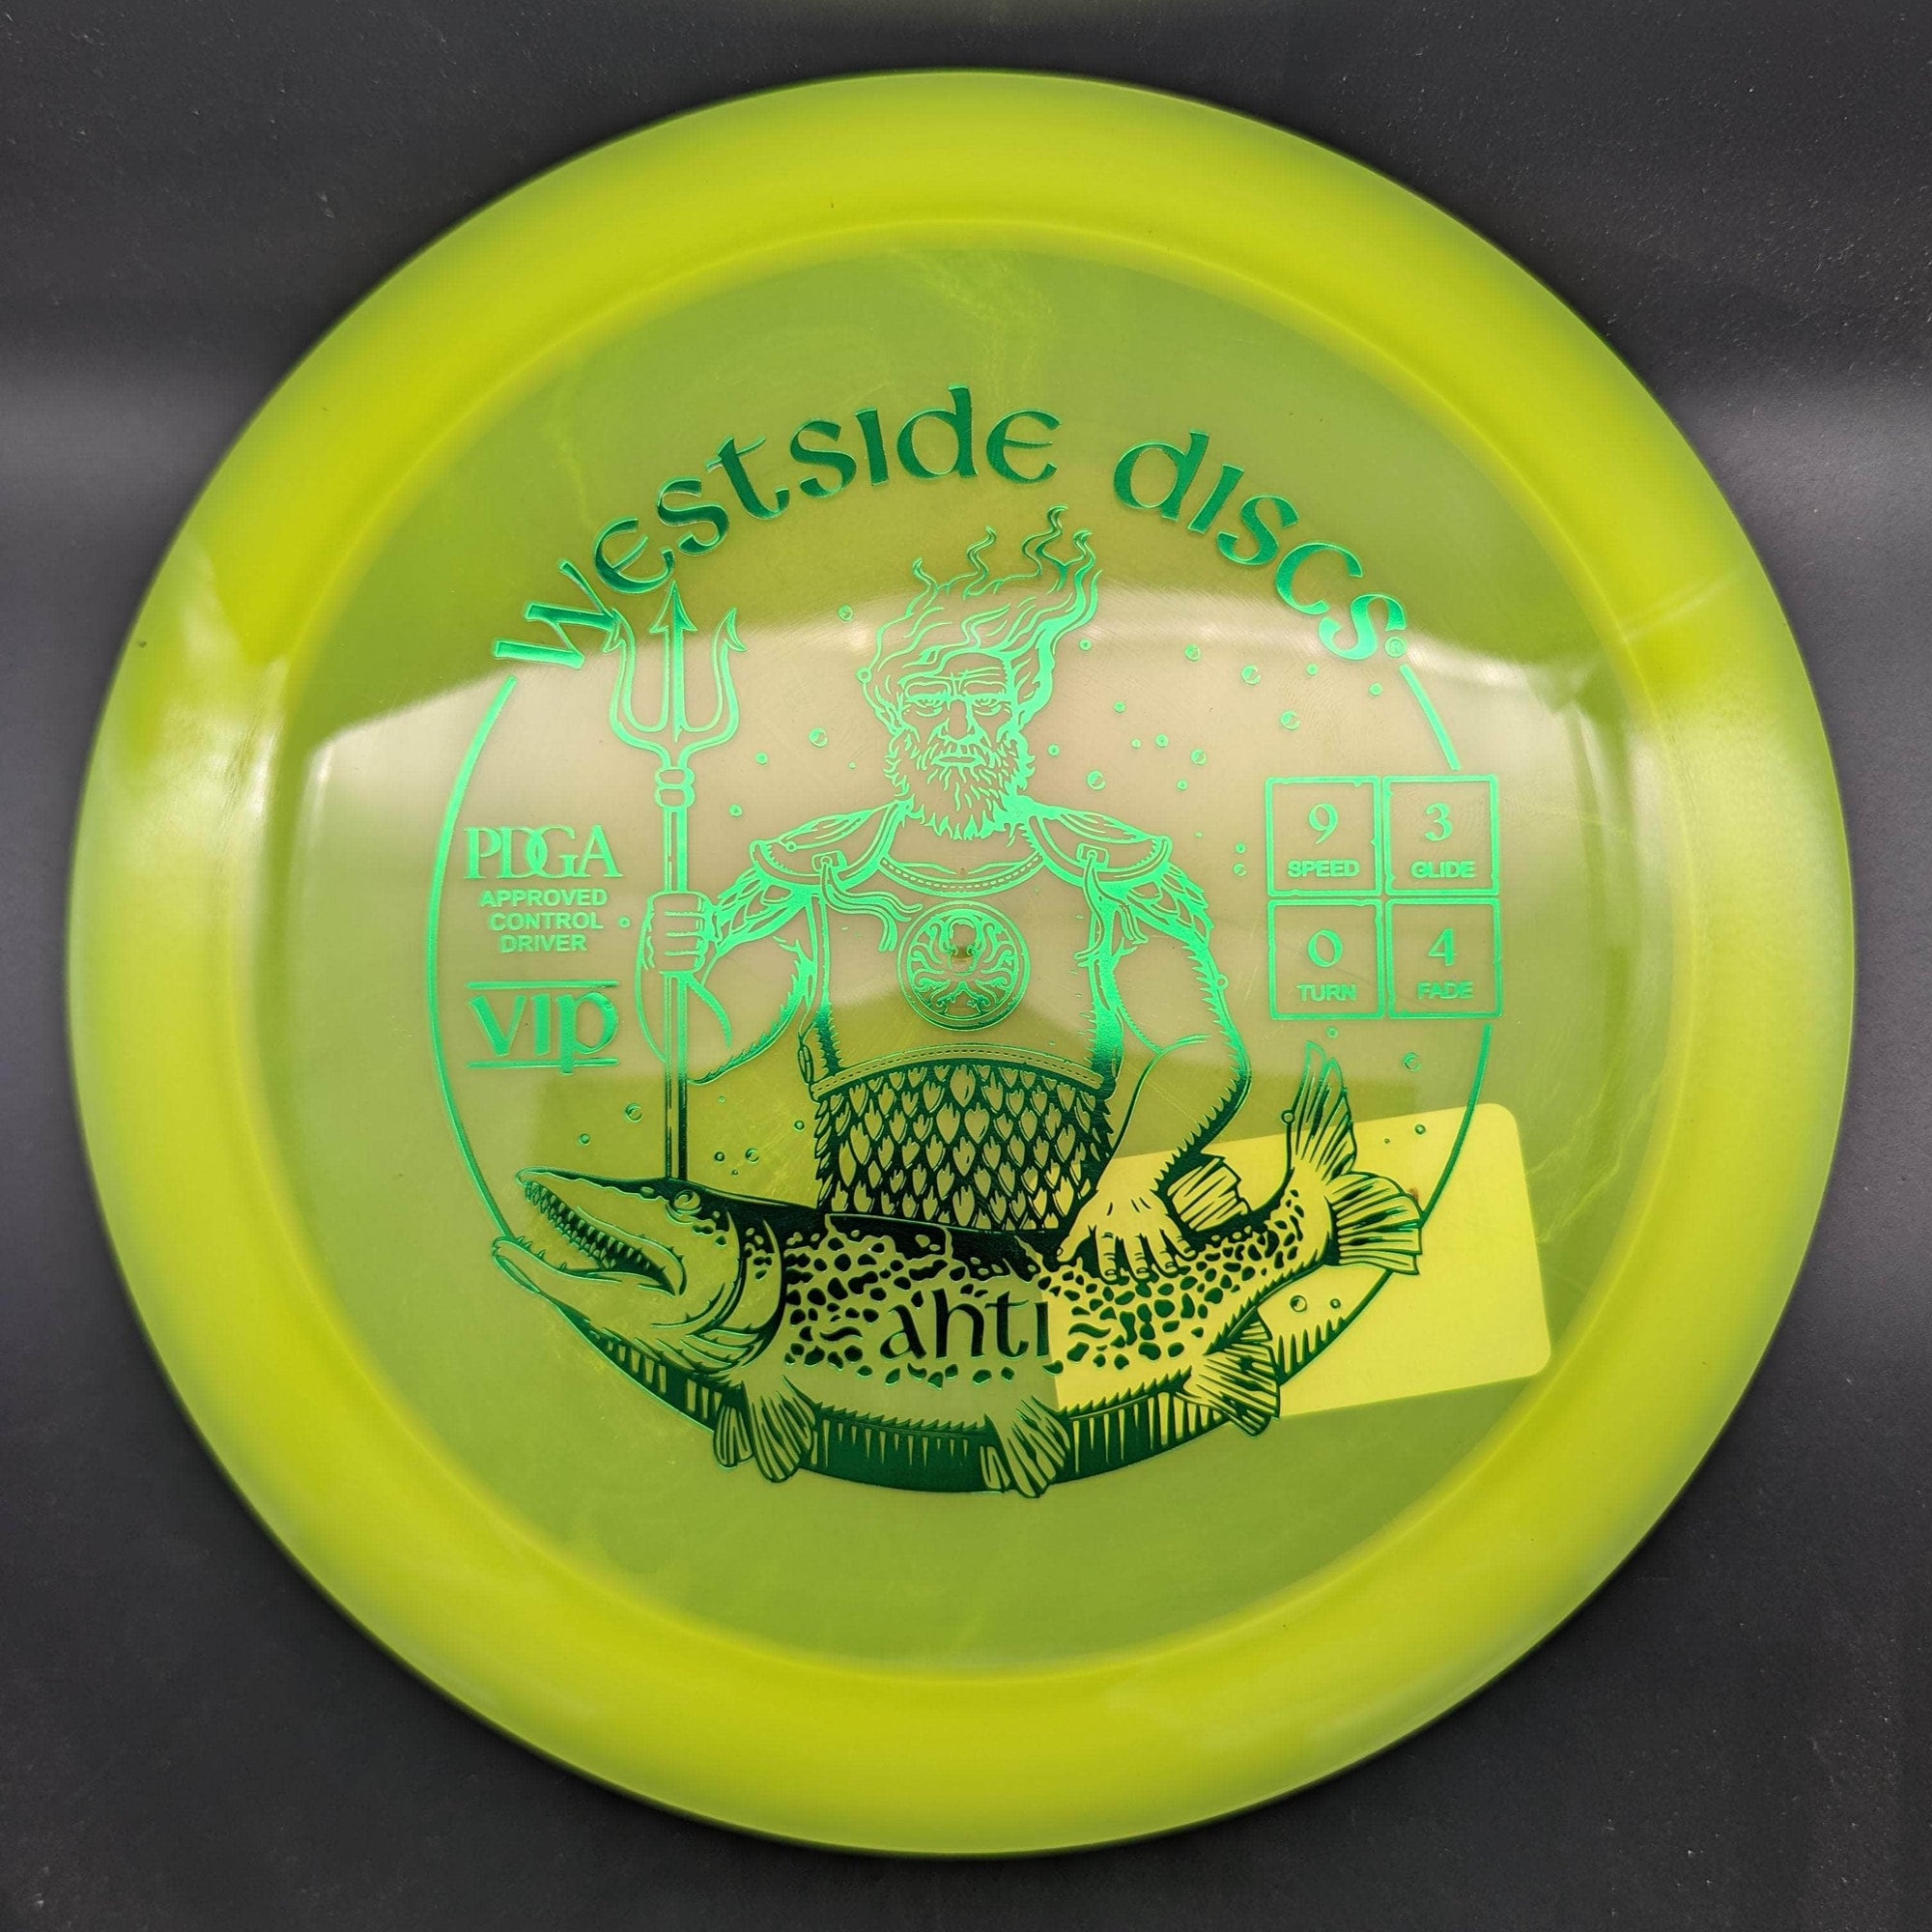 Westside Discs Fairway Driver Yellow Green Stamp 174g Ahti, VIP Plastic